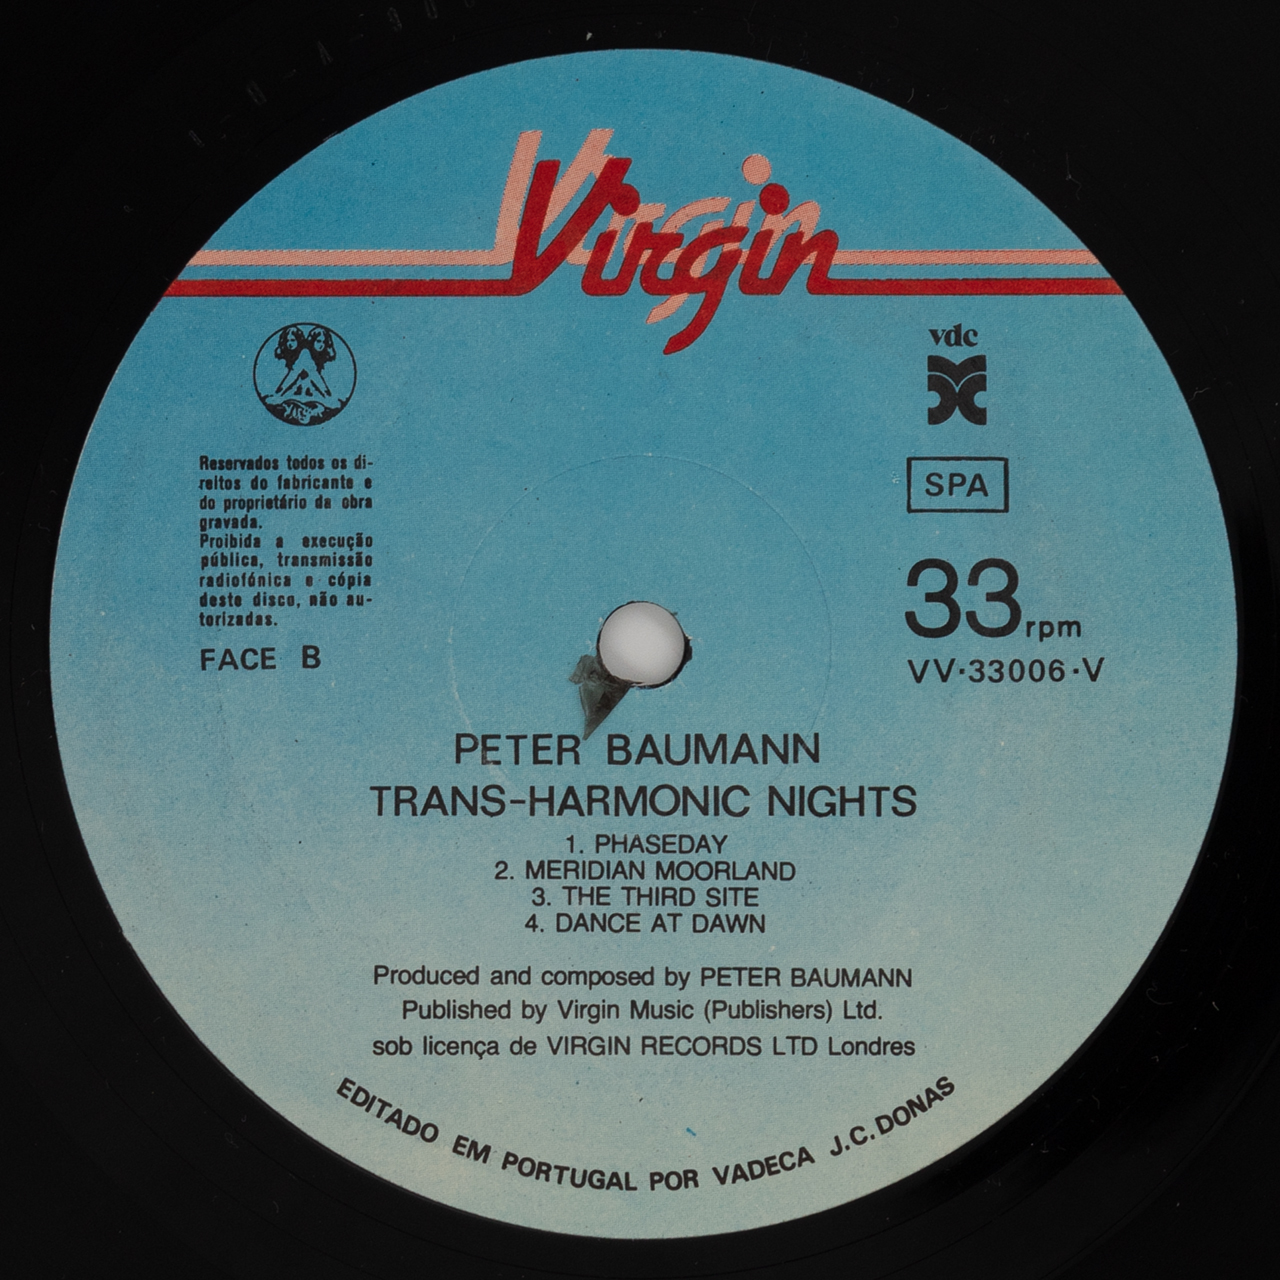 Trans-Harmonic Nights